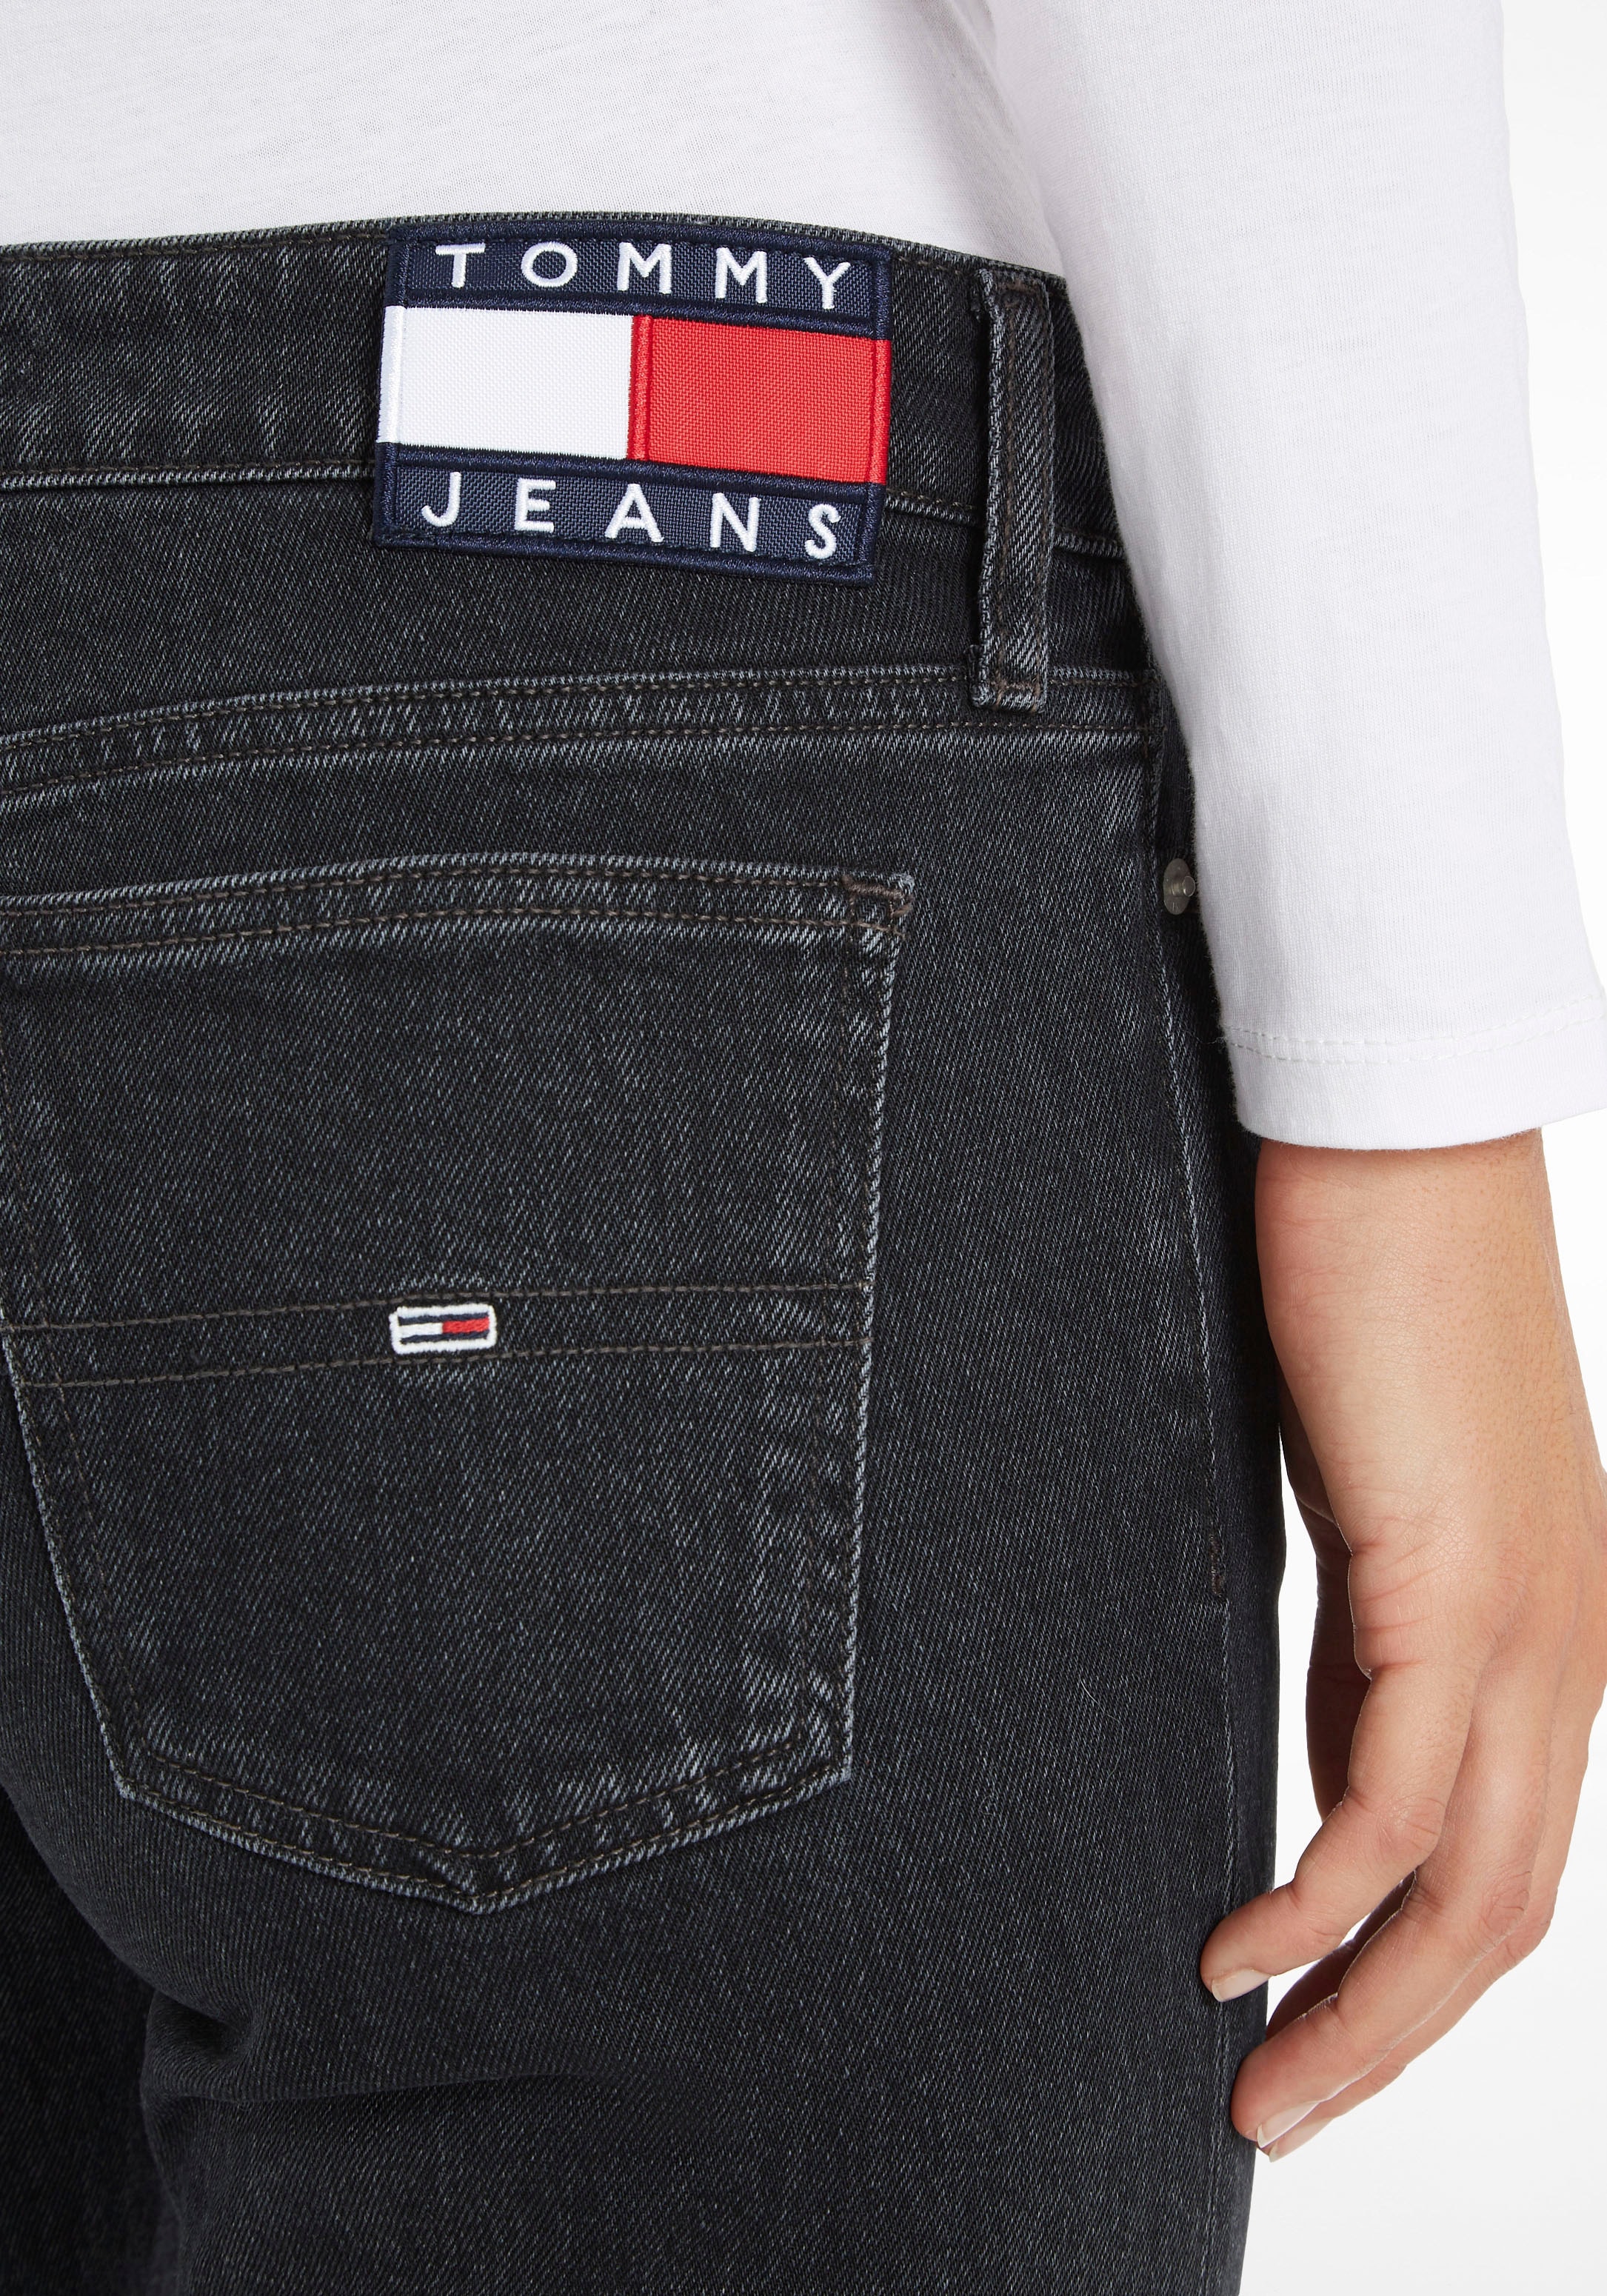 Tommy Jeans Schlagjeans, mit Logobadge | Jeans I\'m Tommy walking online